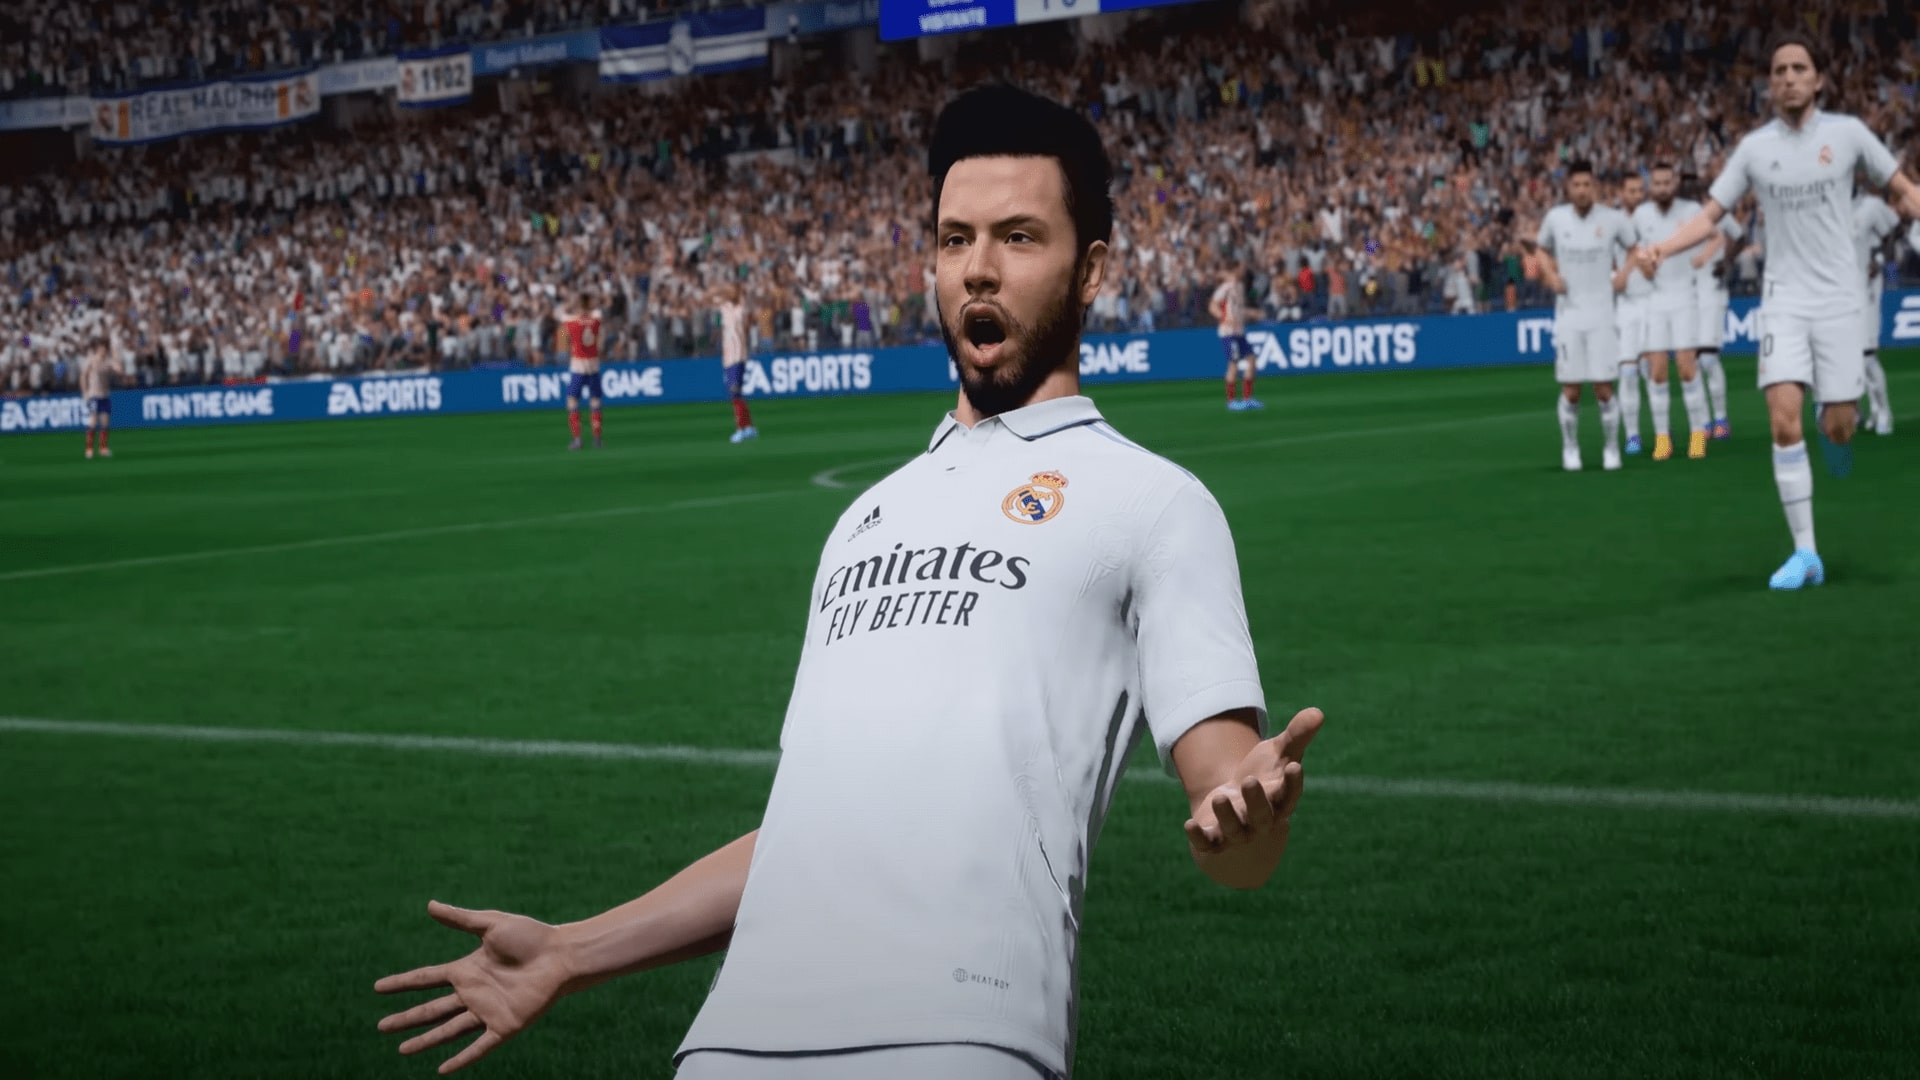 How many people play EA Sports FIFA? — 2023 statistics